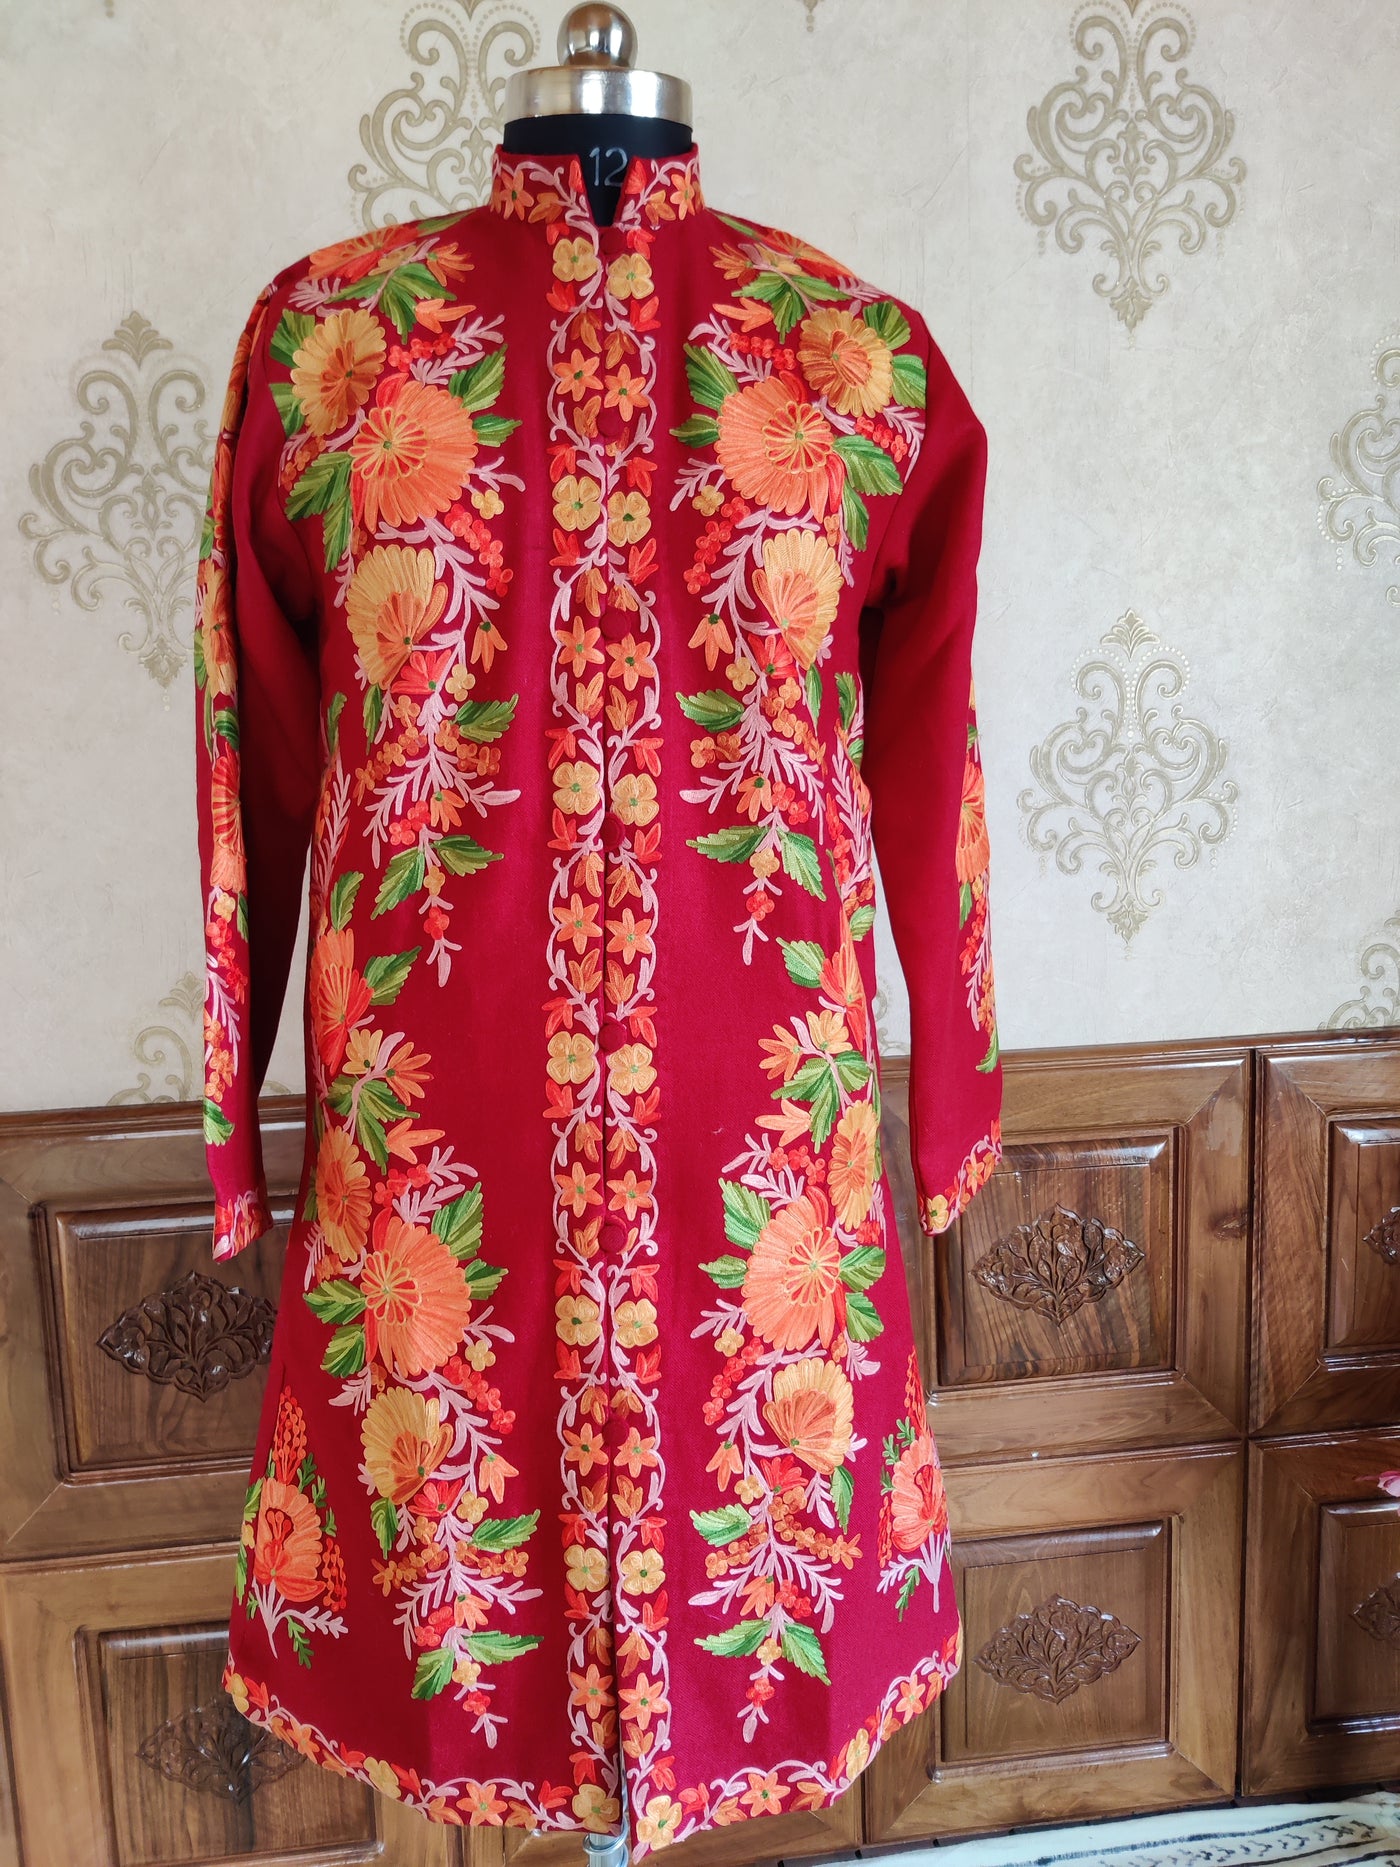 Kashmiri jacket with Floral embroidery - KashmKari